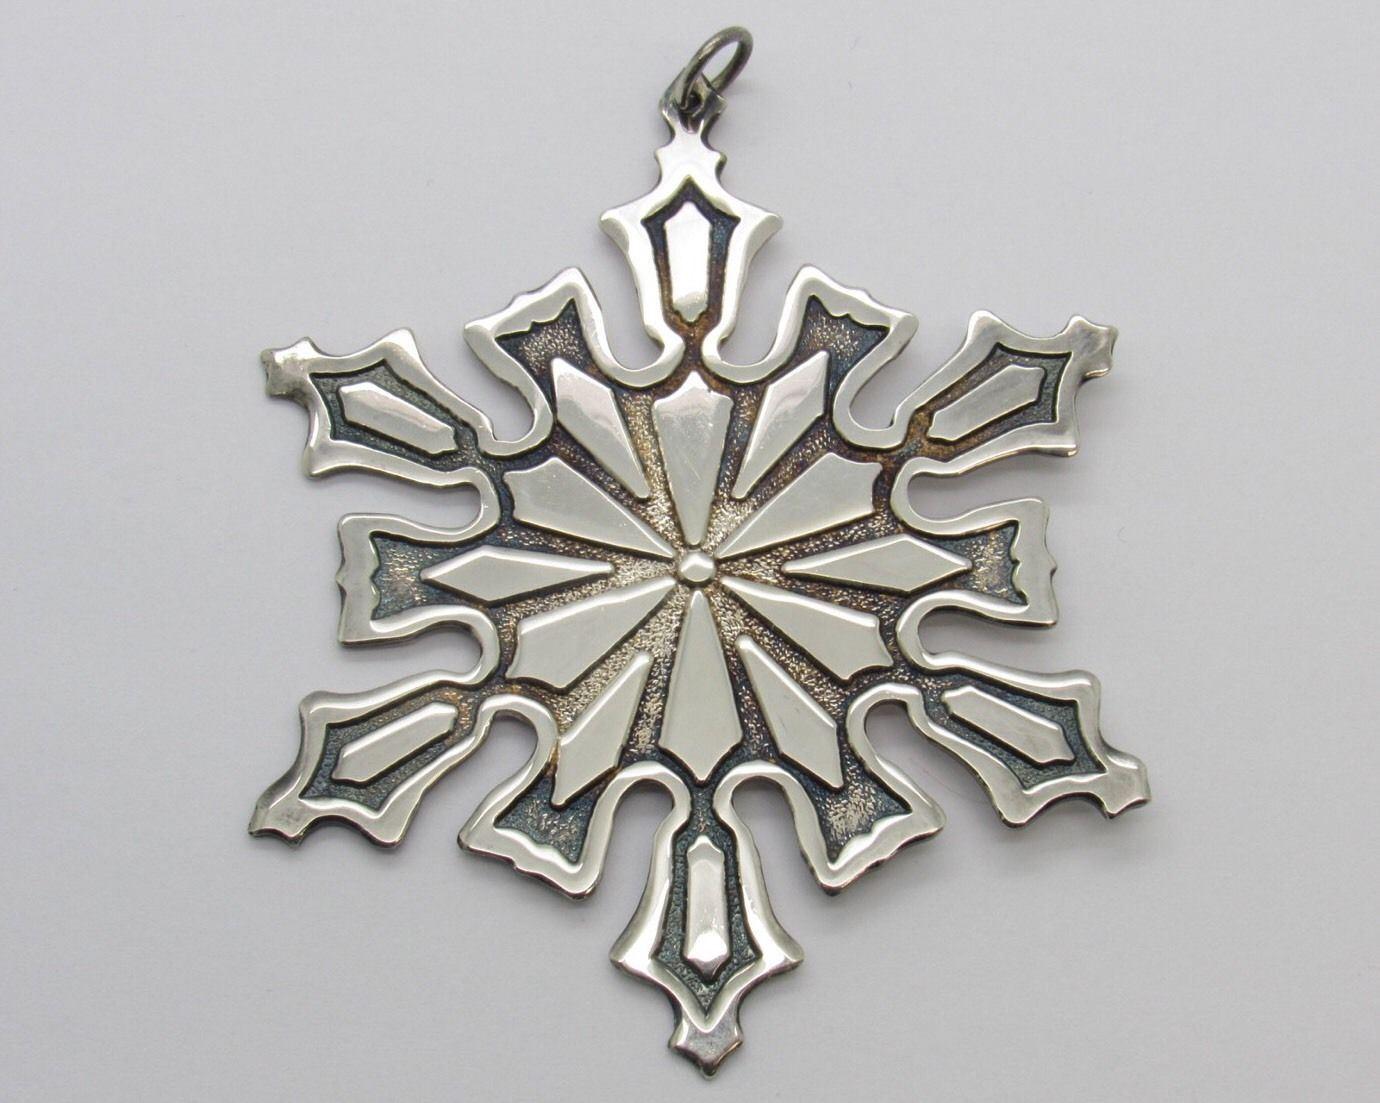 Metropolitan Museum of Art Silver Snowflake Christmas Ornament. Marked: 1977 MMA. Measures: 2 3/4